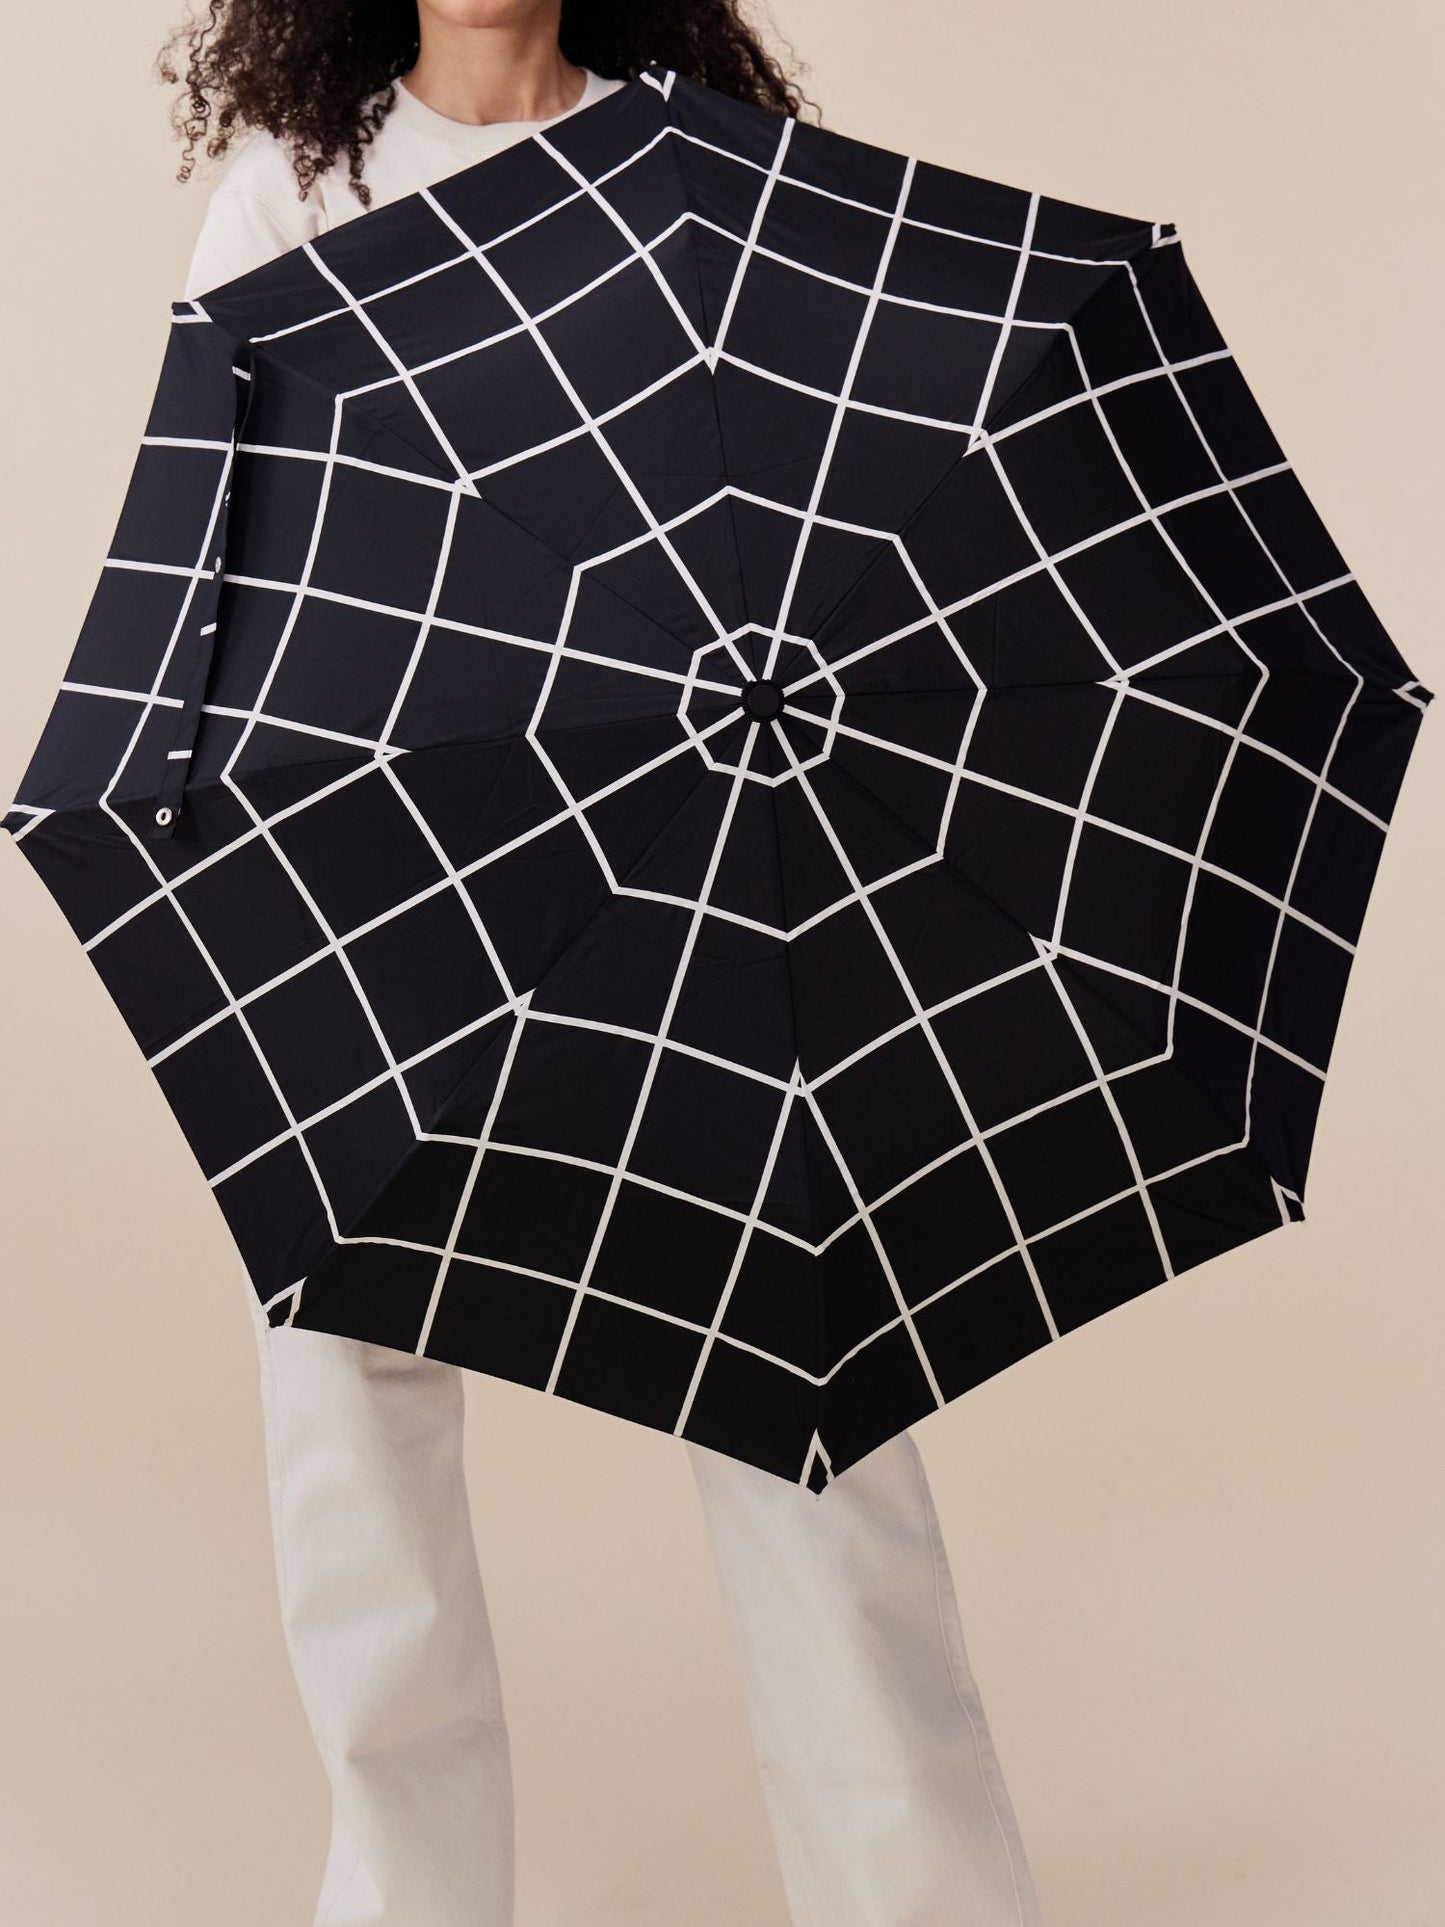 ORIGINAL DUCKHEAD Compact Umbrella in Black Grid available at Lahn.shop